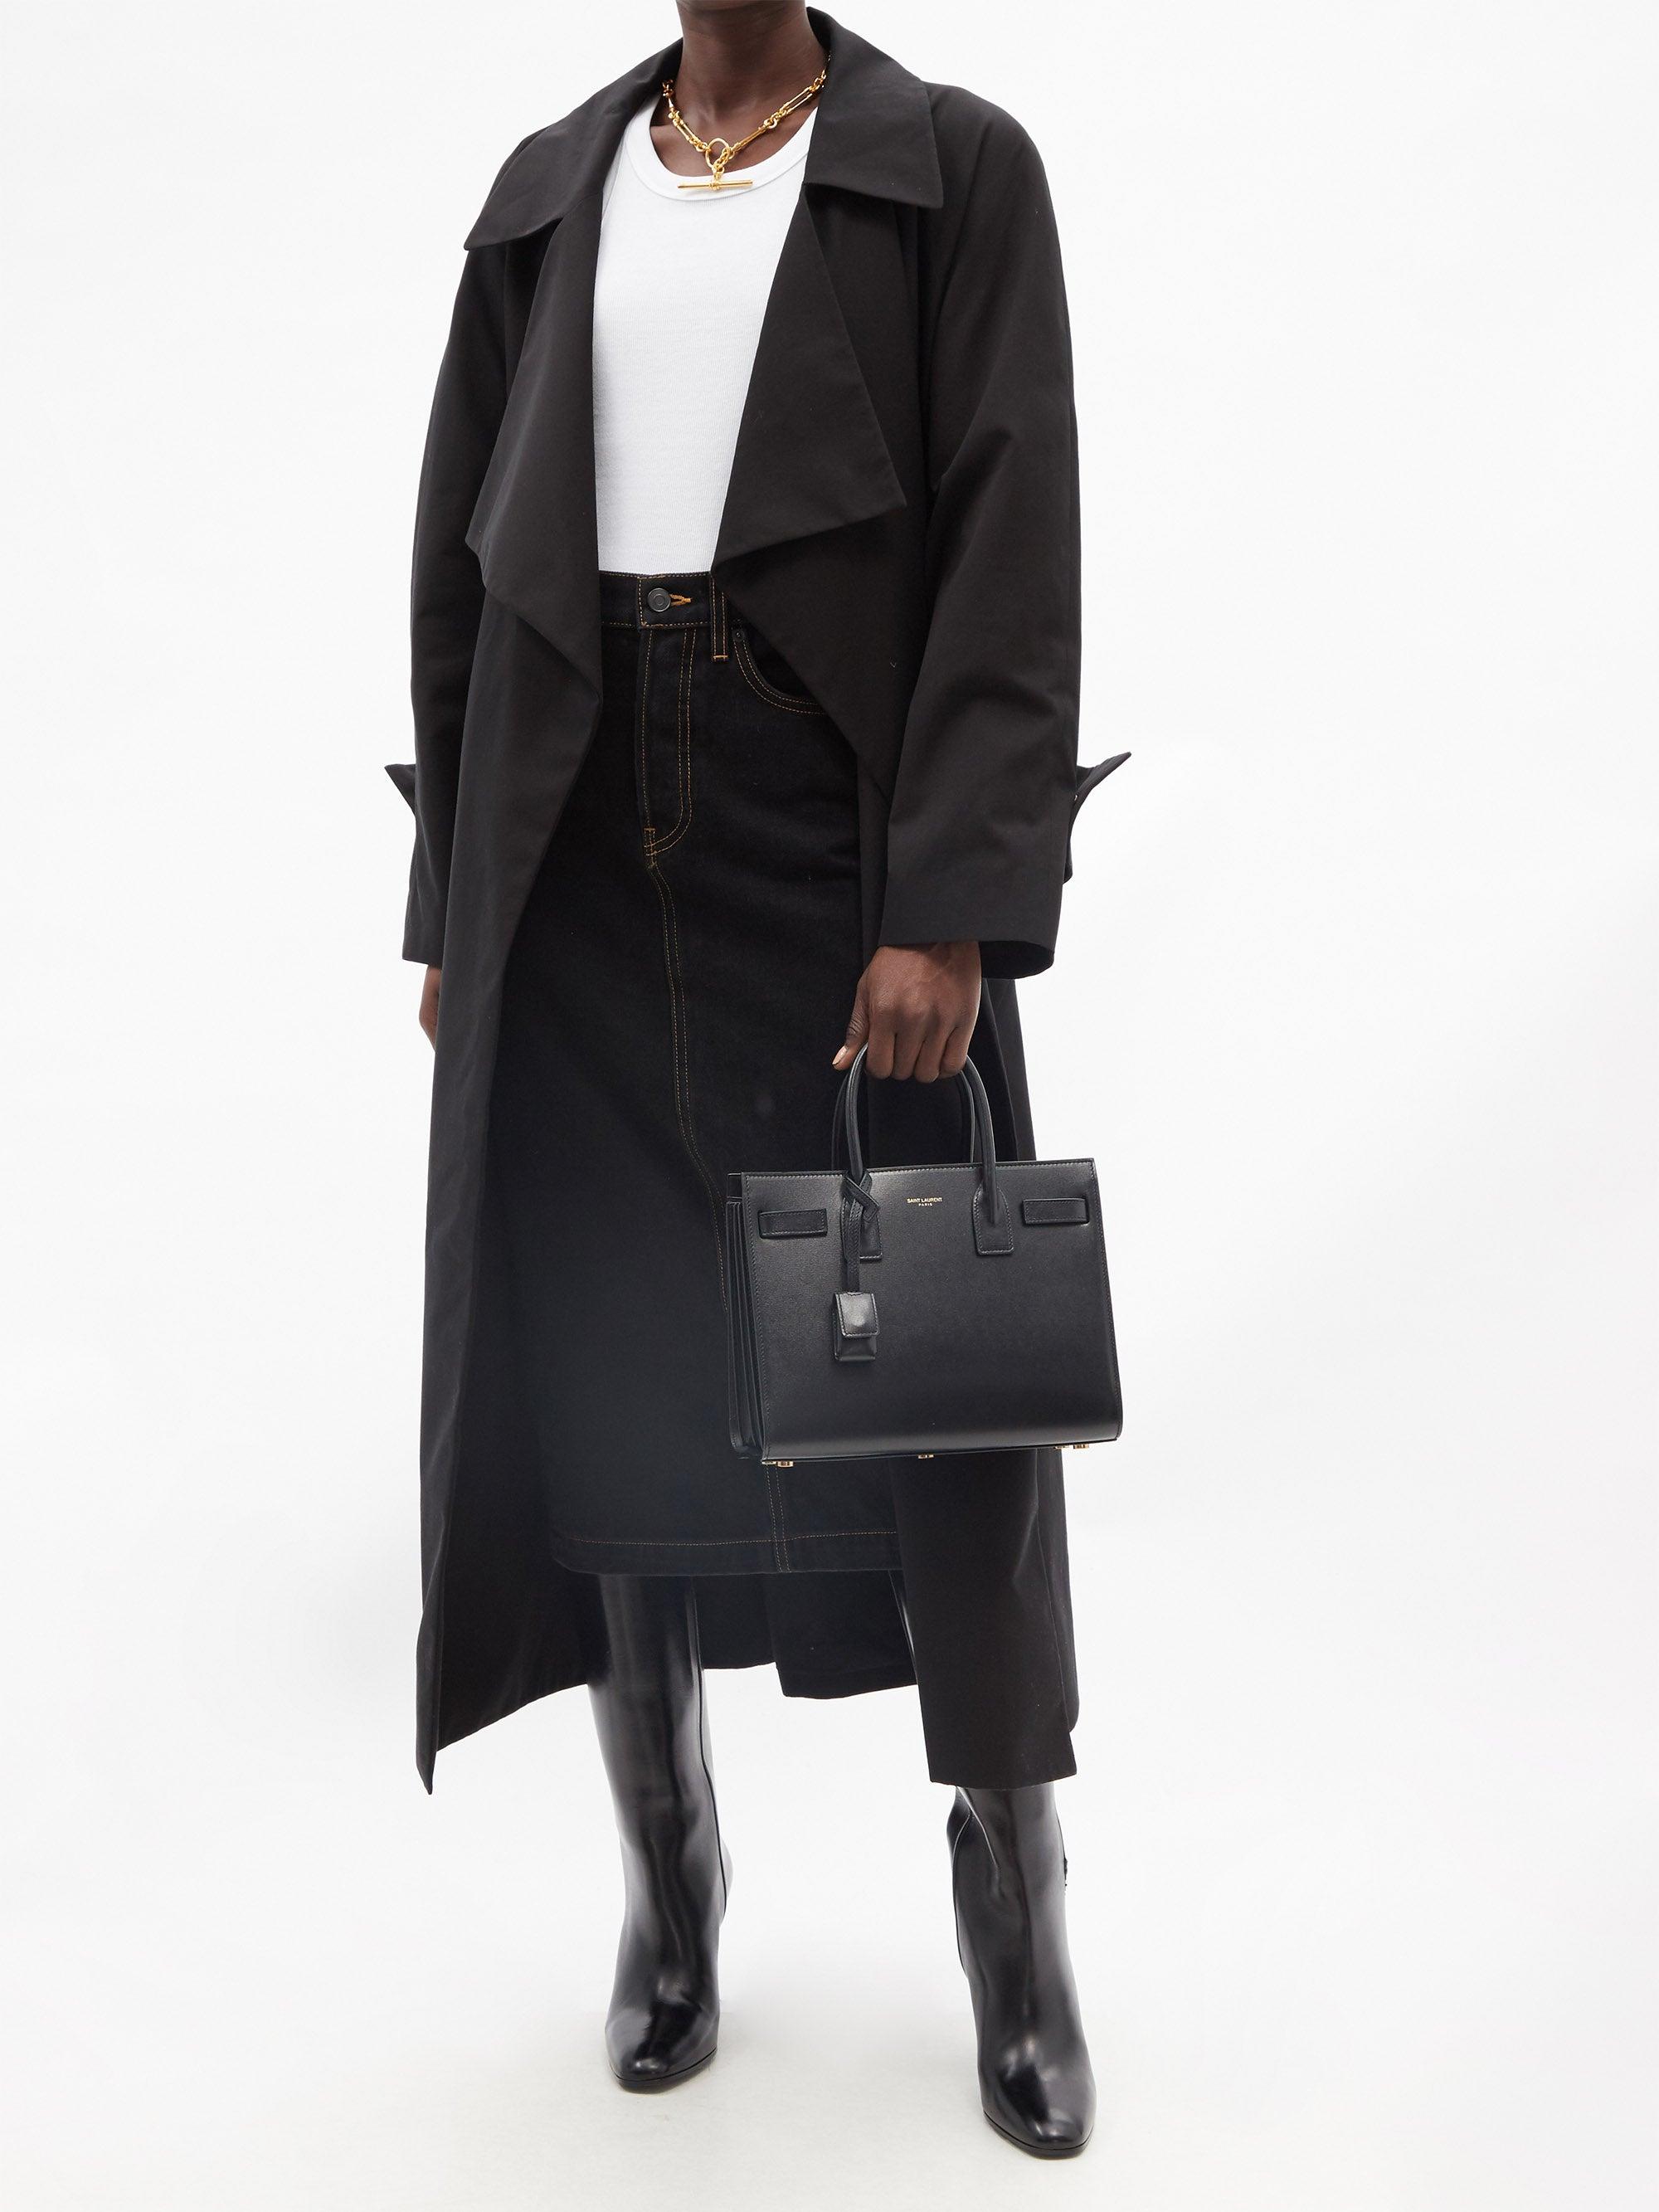 Saint Laurent Sac De Jour Baby Leather Handbag in Black | Lyst